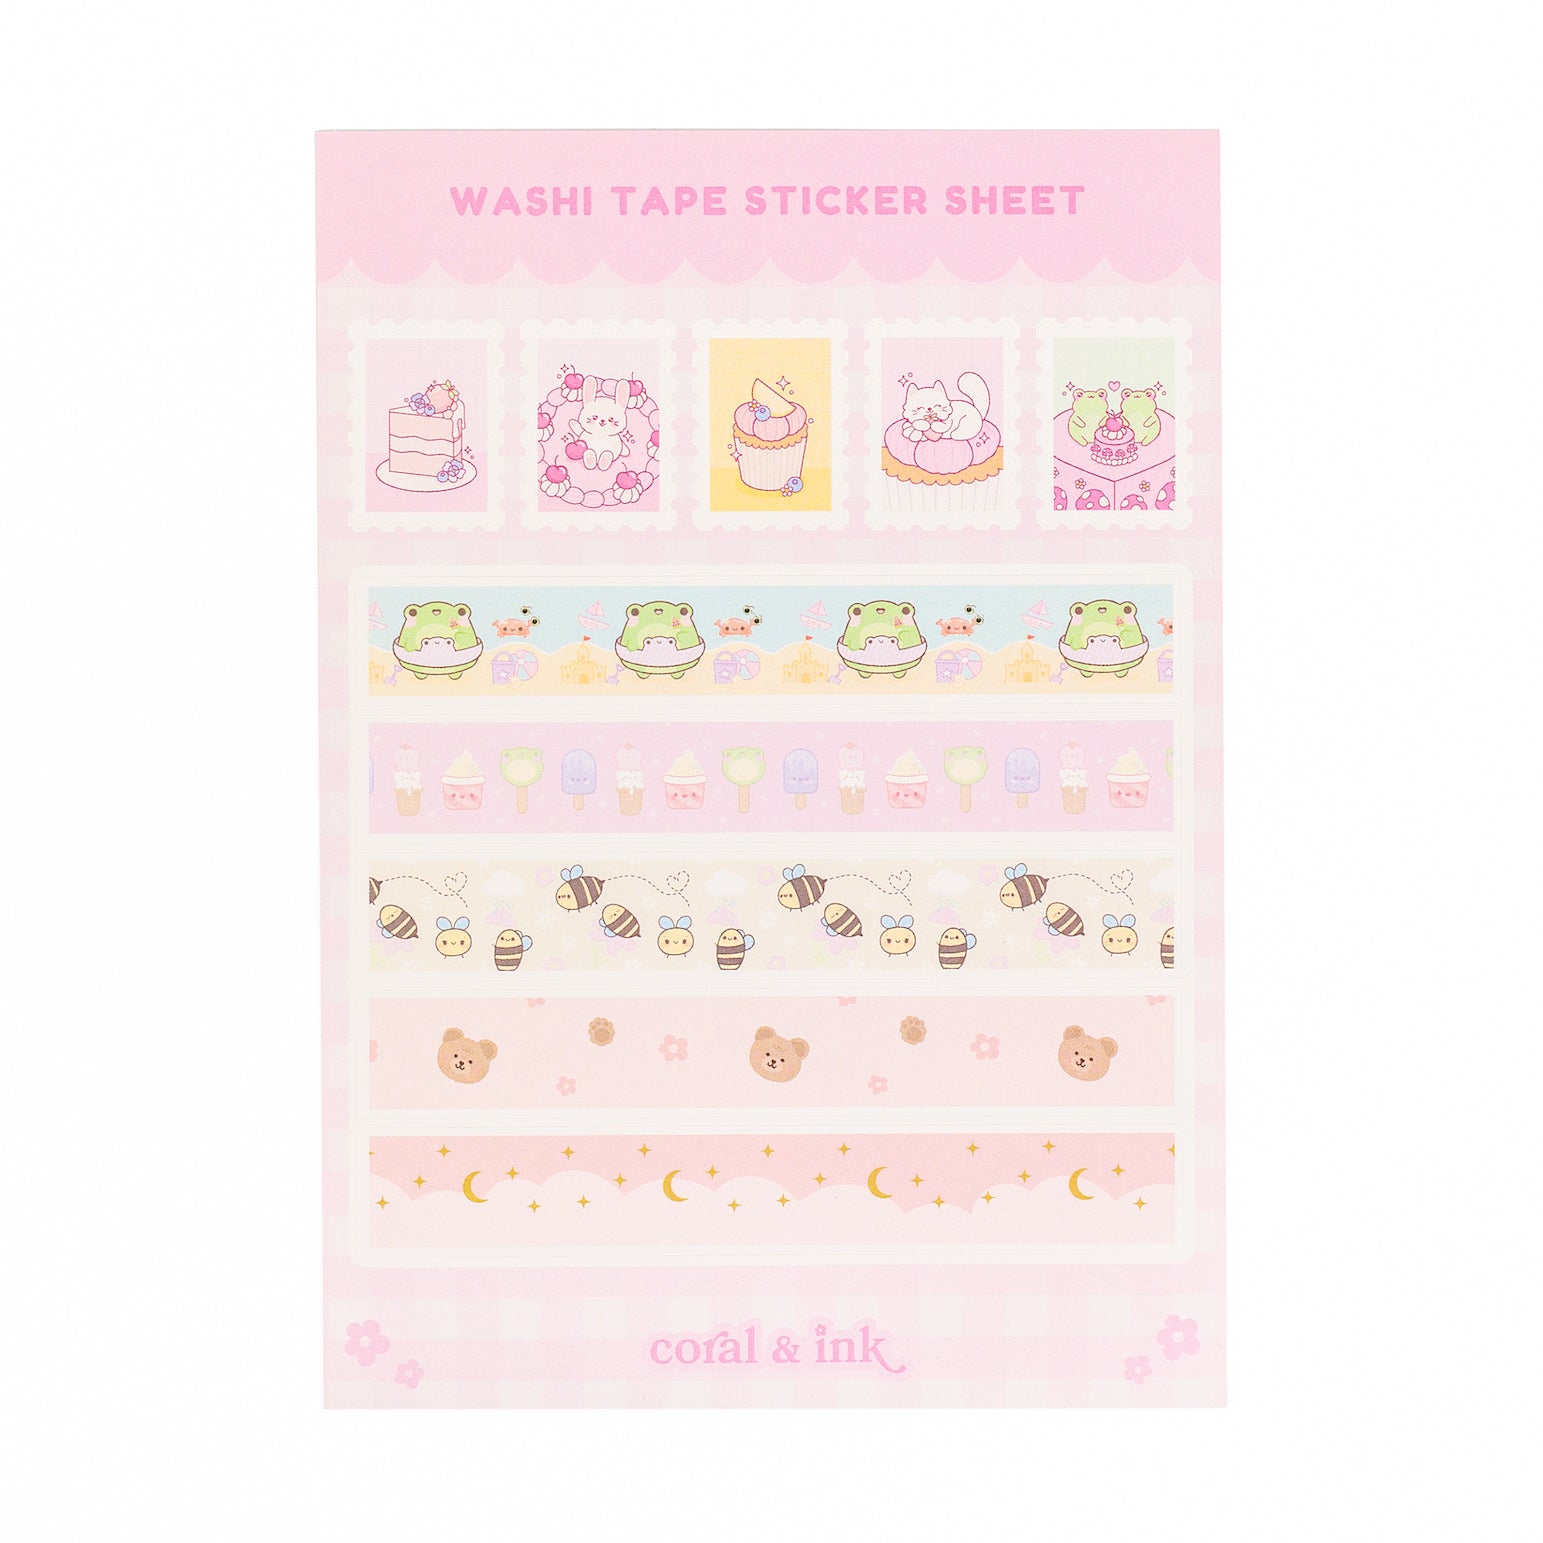 Washi Tape Sample Sticker Sheet